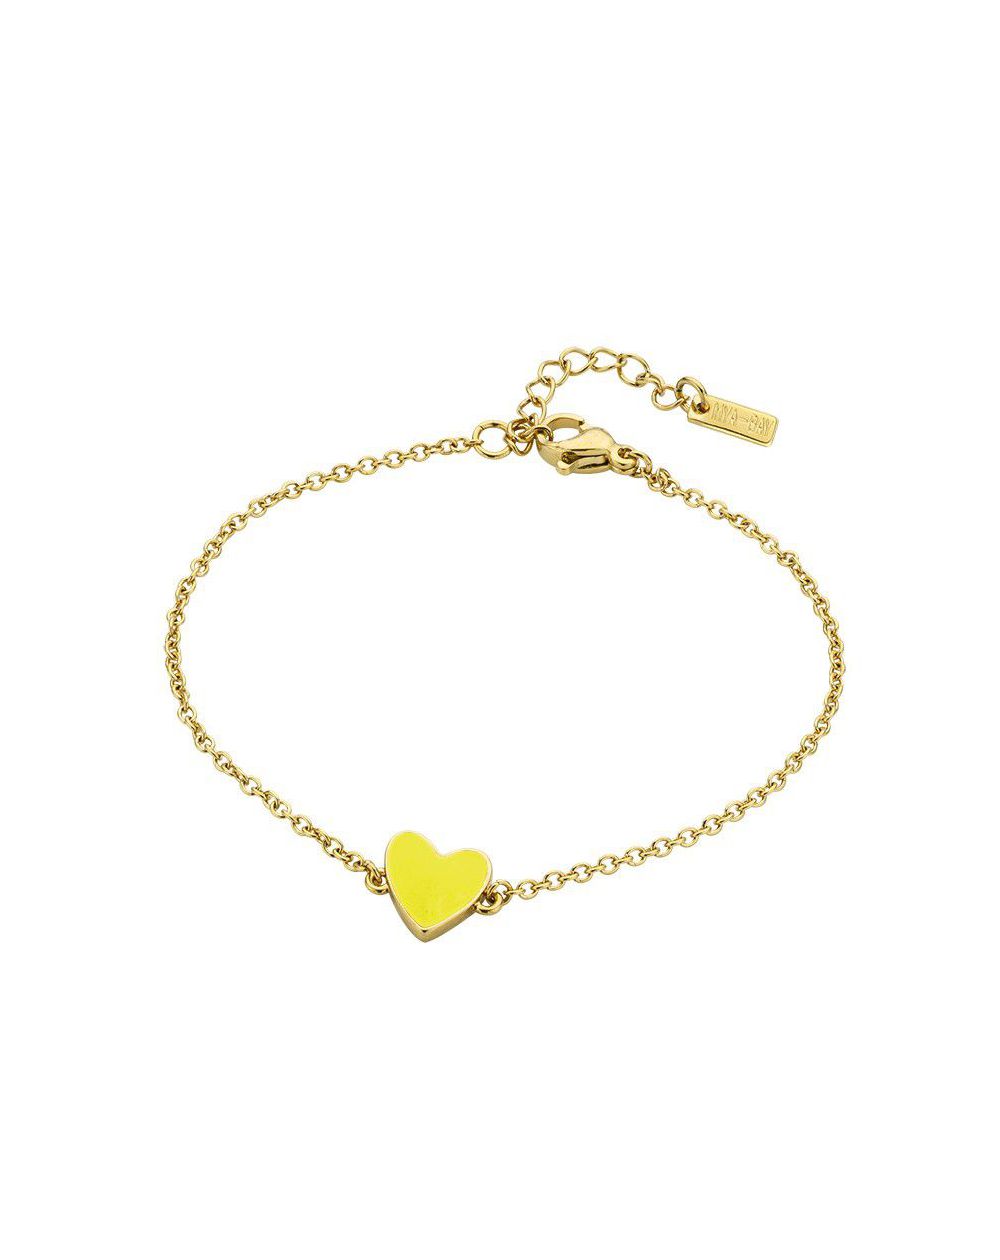 Bracelet MYA BAY - Neon yellow Heart - BR-232 - Bijoux Mya Bay